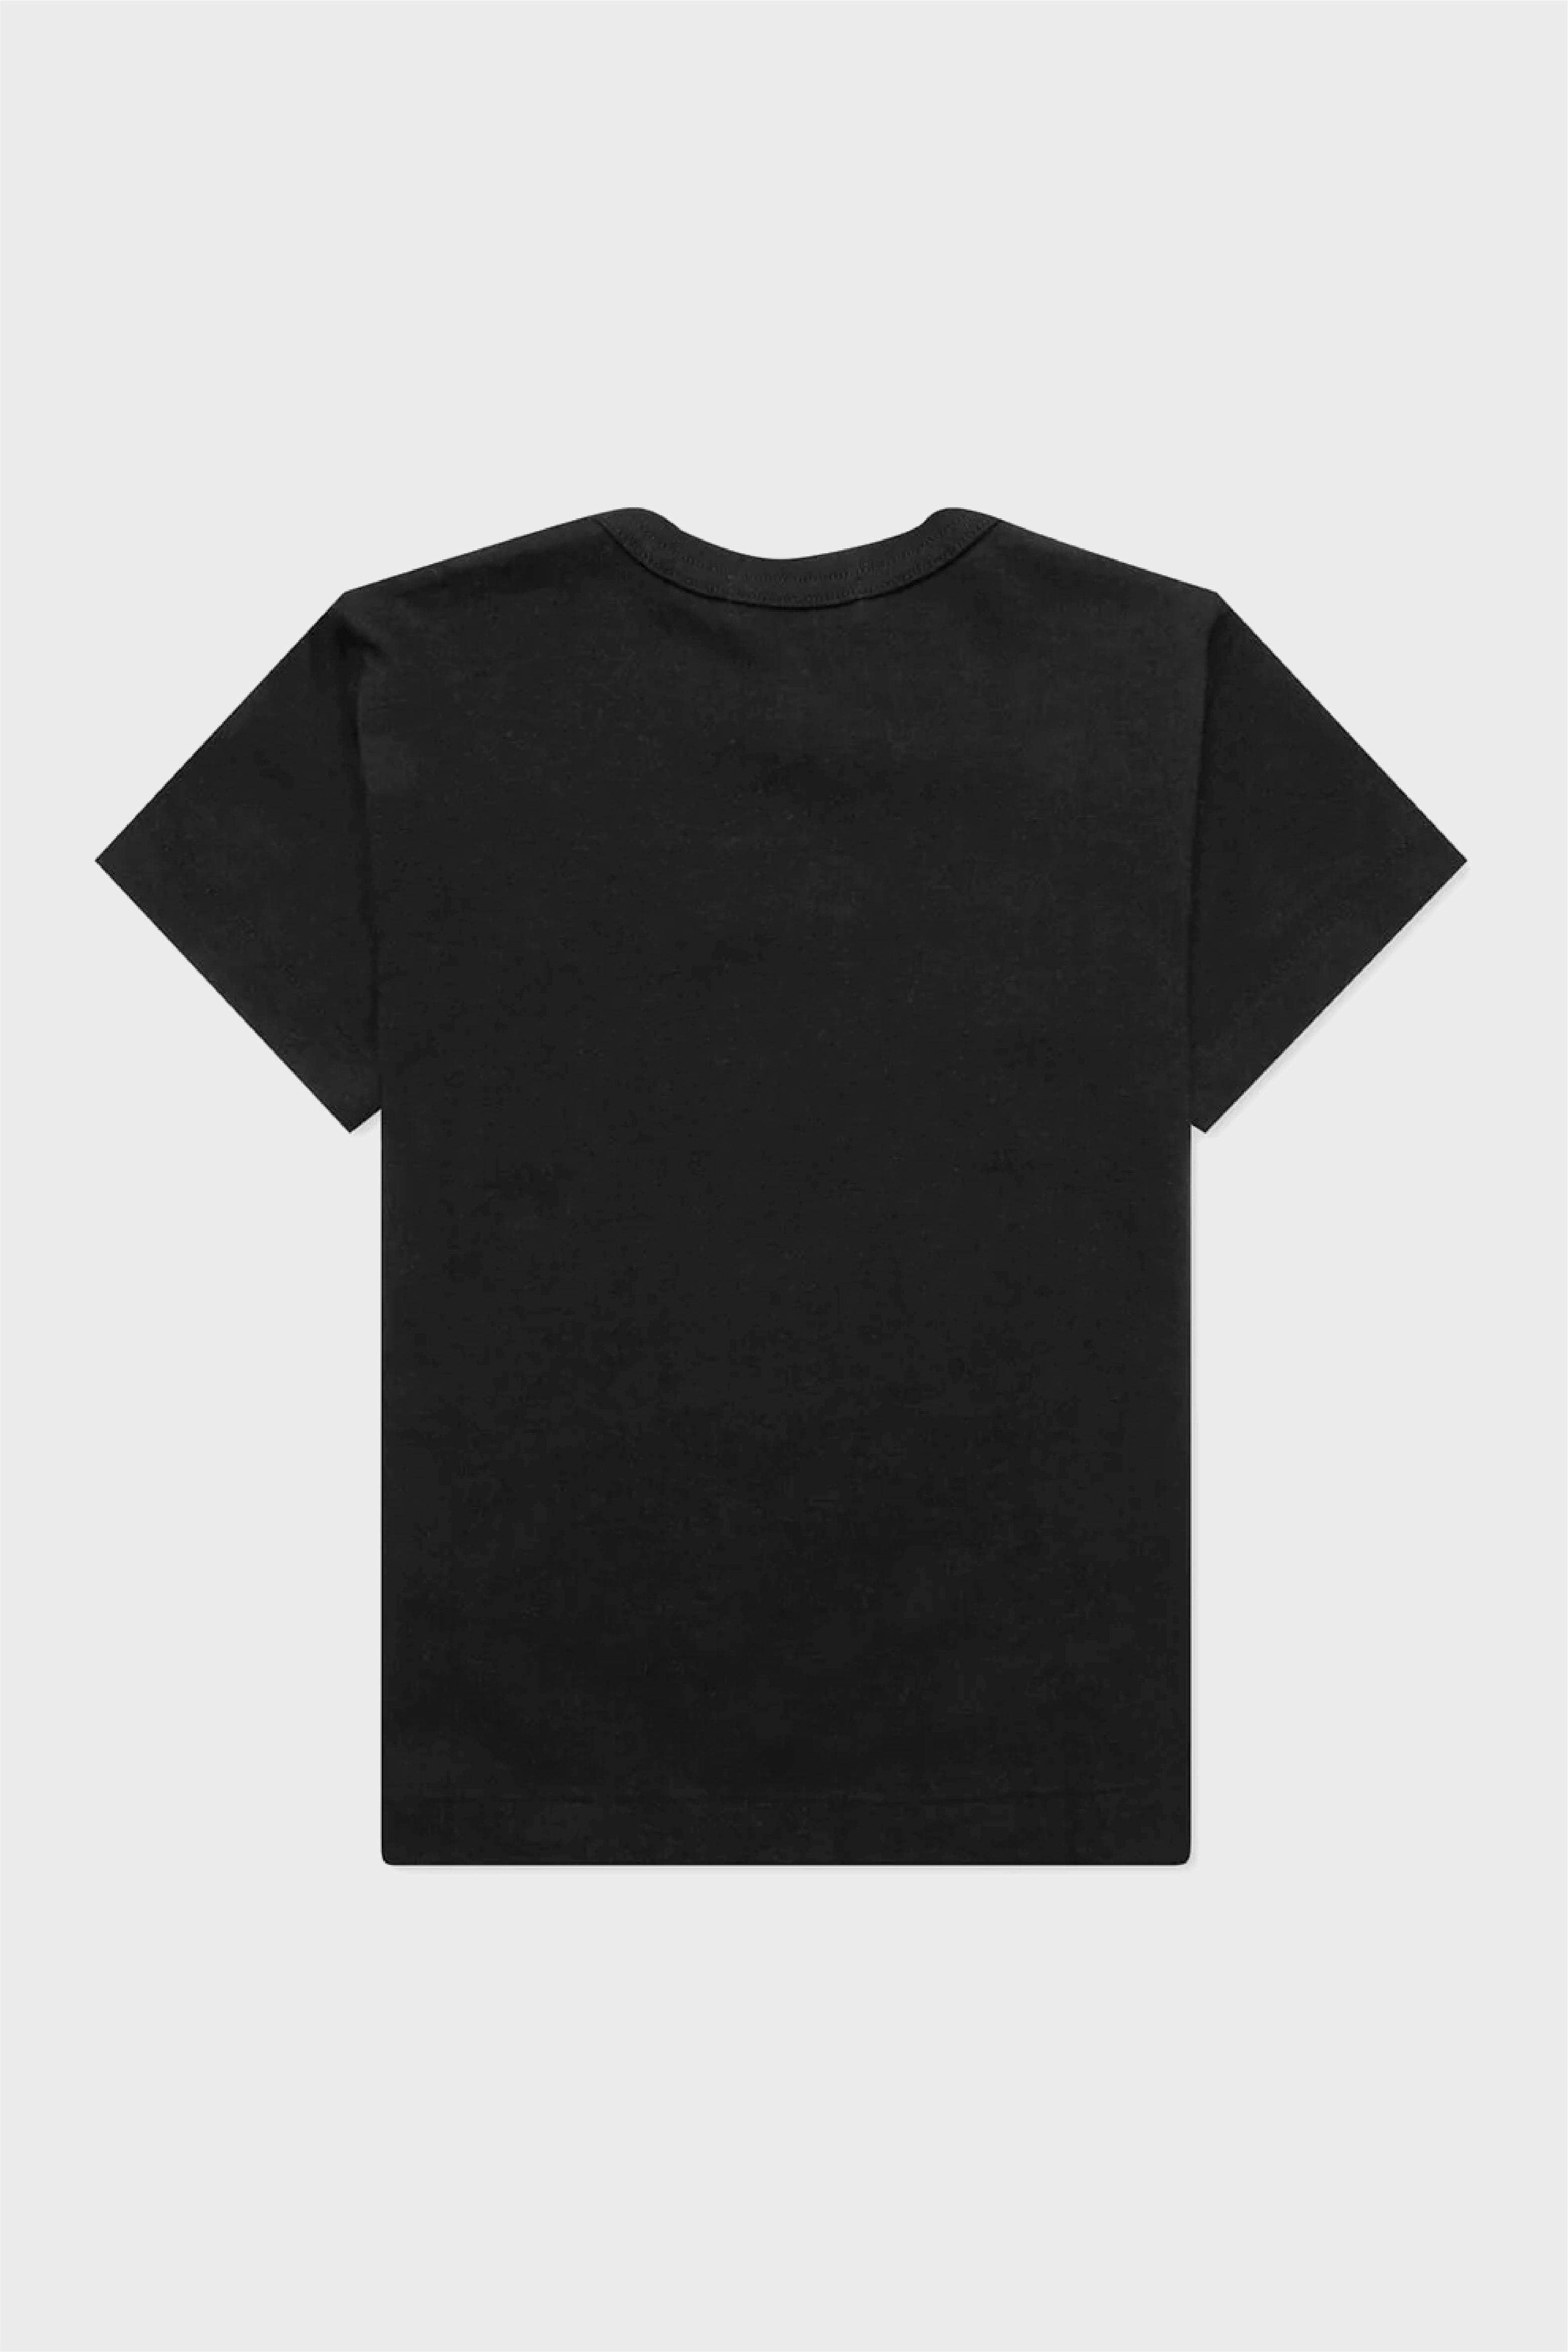 Selectshop FRAME - COMME DES GARCONS PLAY Black Play T-Shirt (Black) Kids Kids Dubai